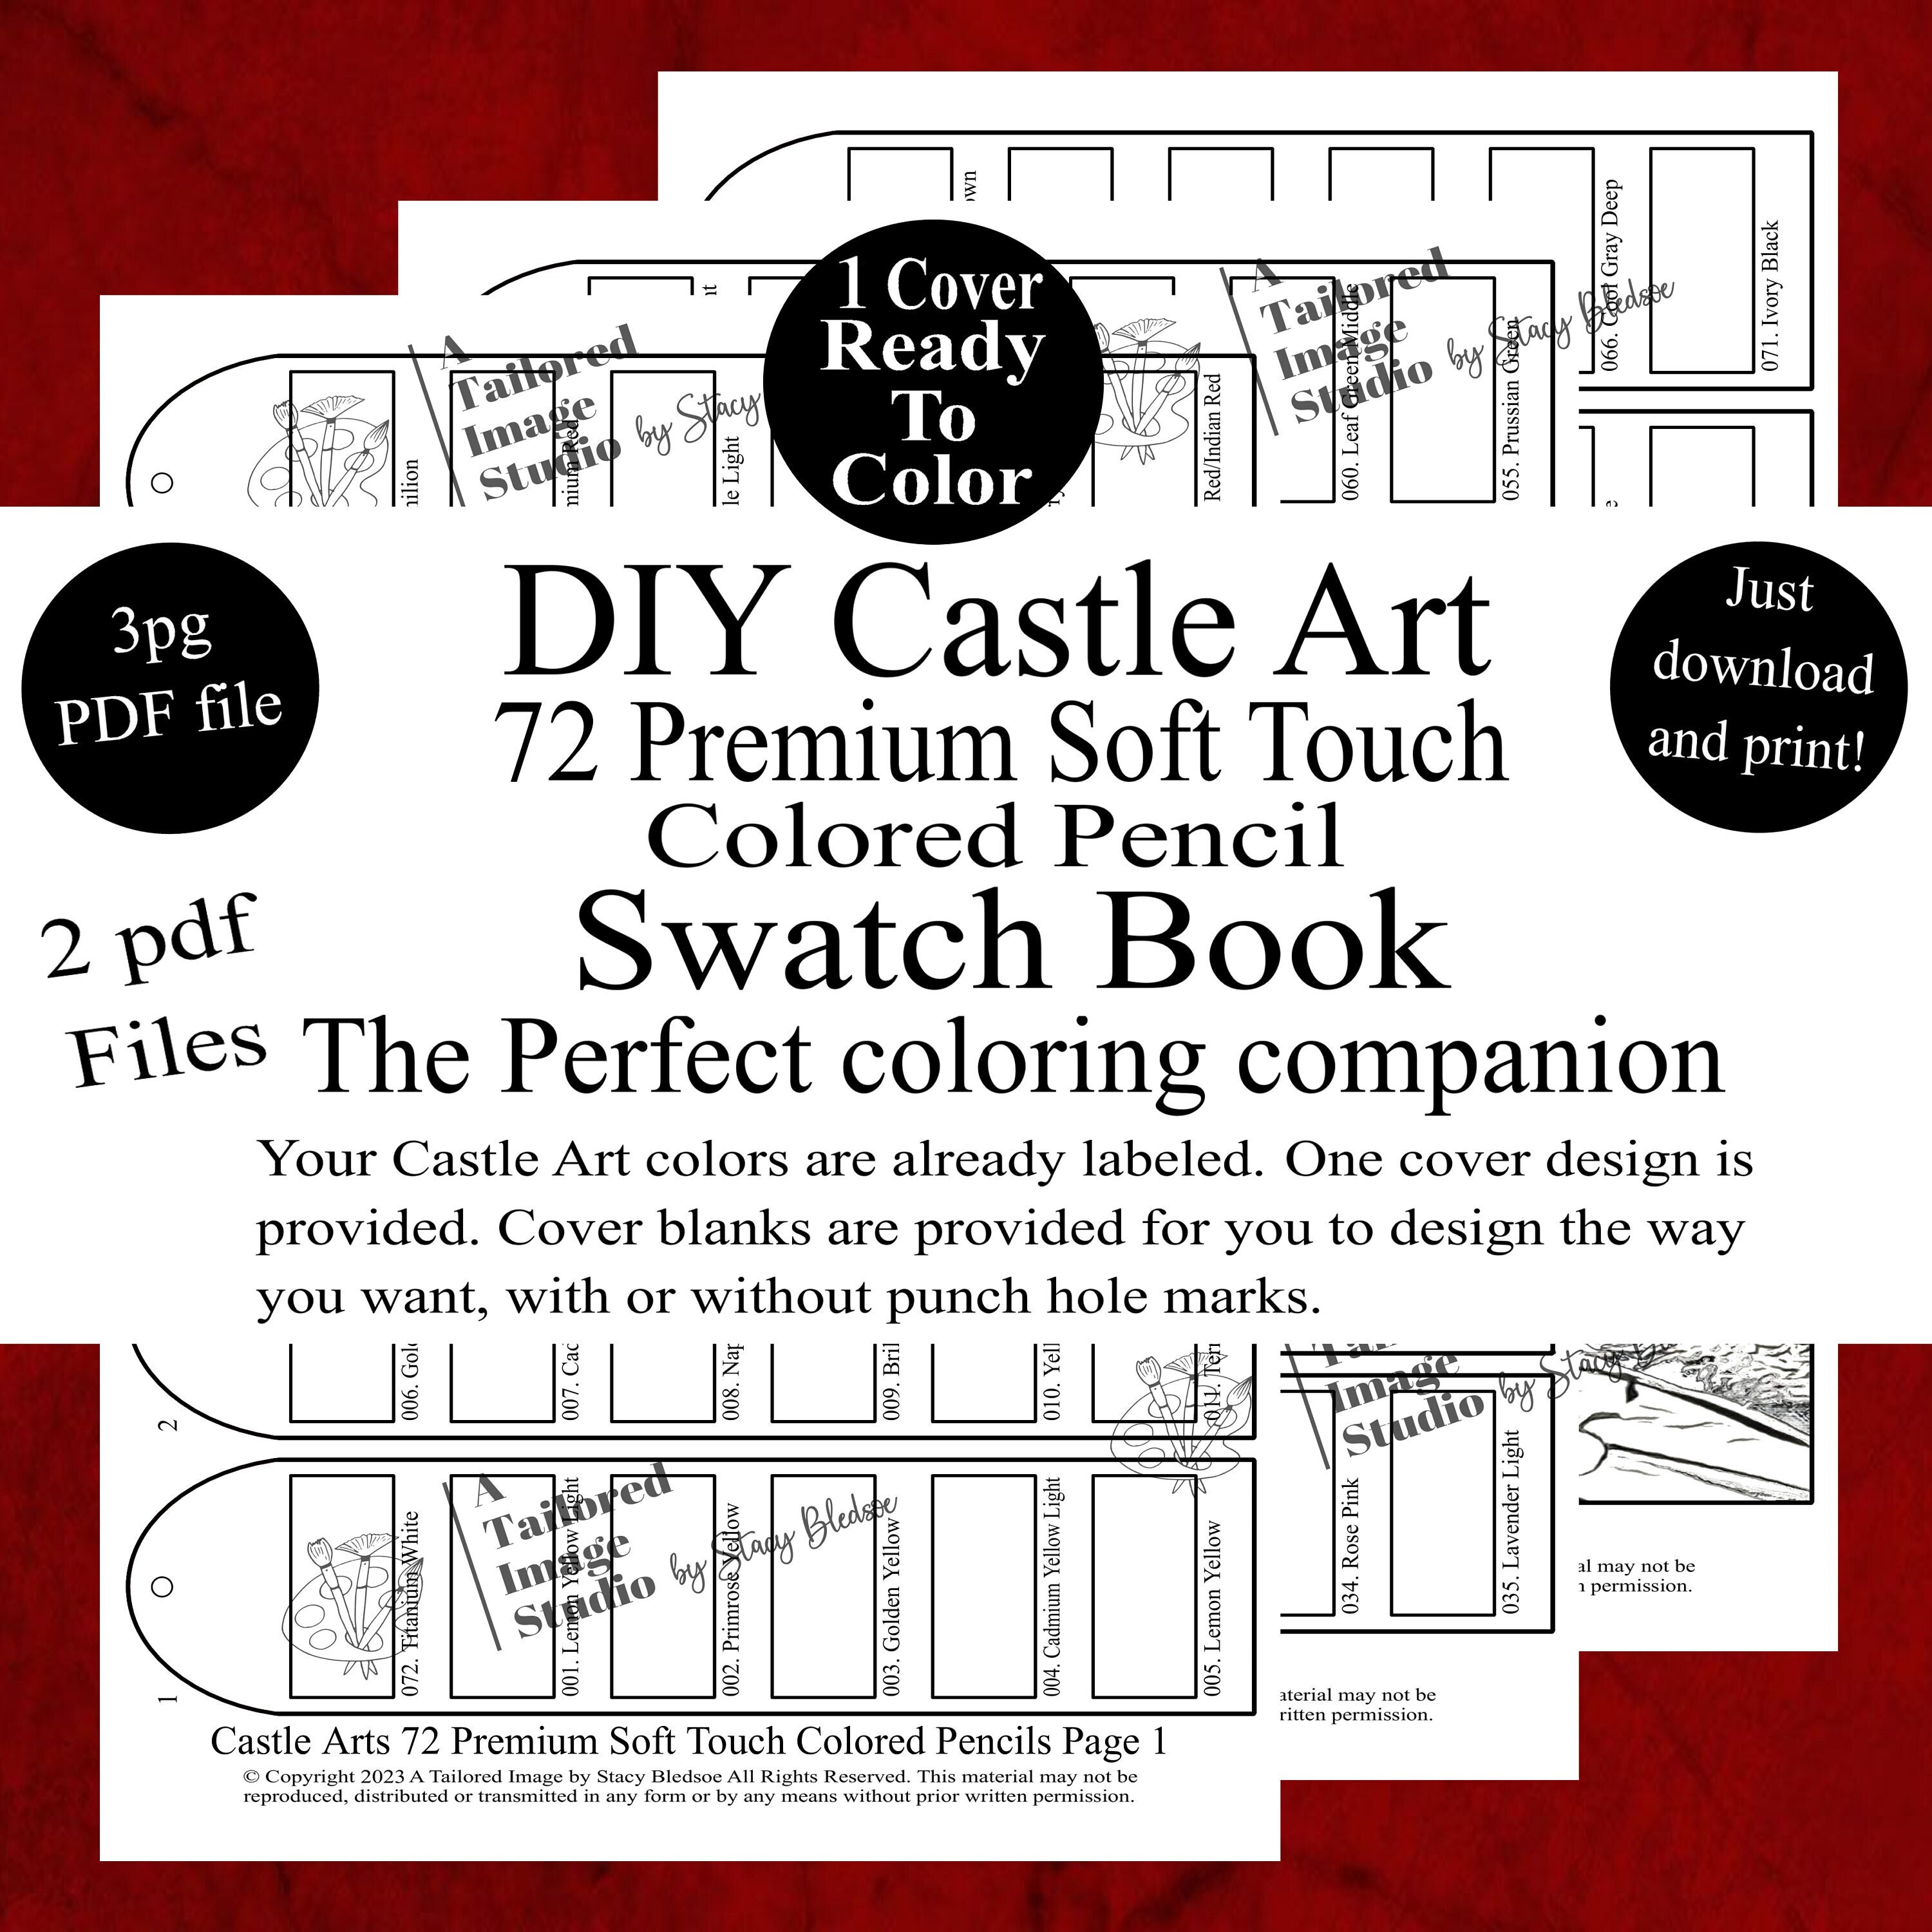 Exploring coloring pencils and reviweing Castle art 72 set 